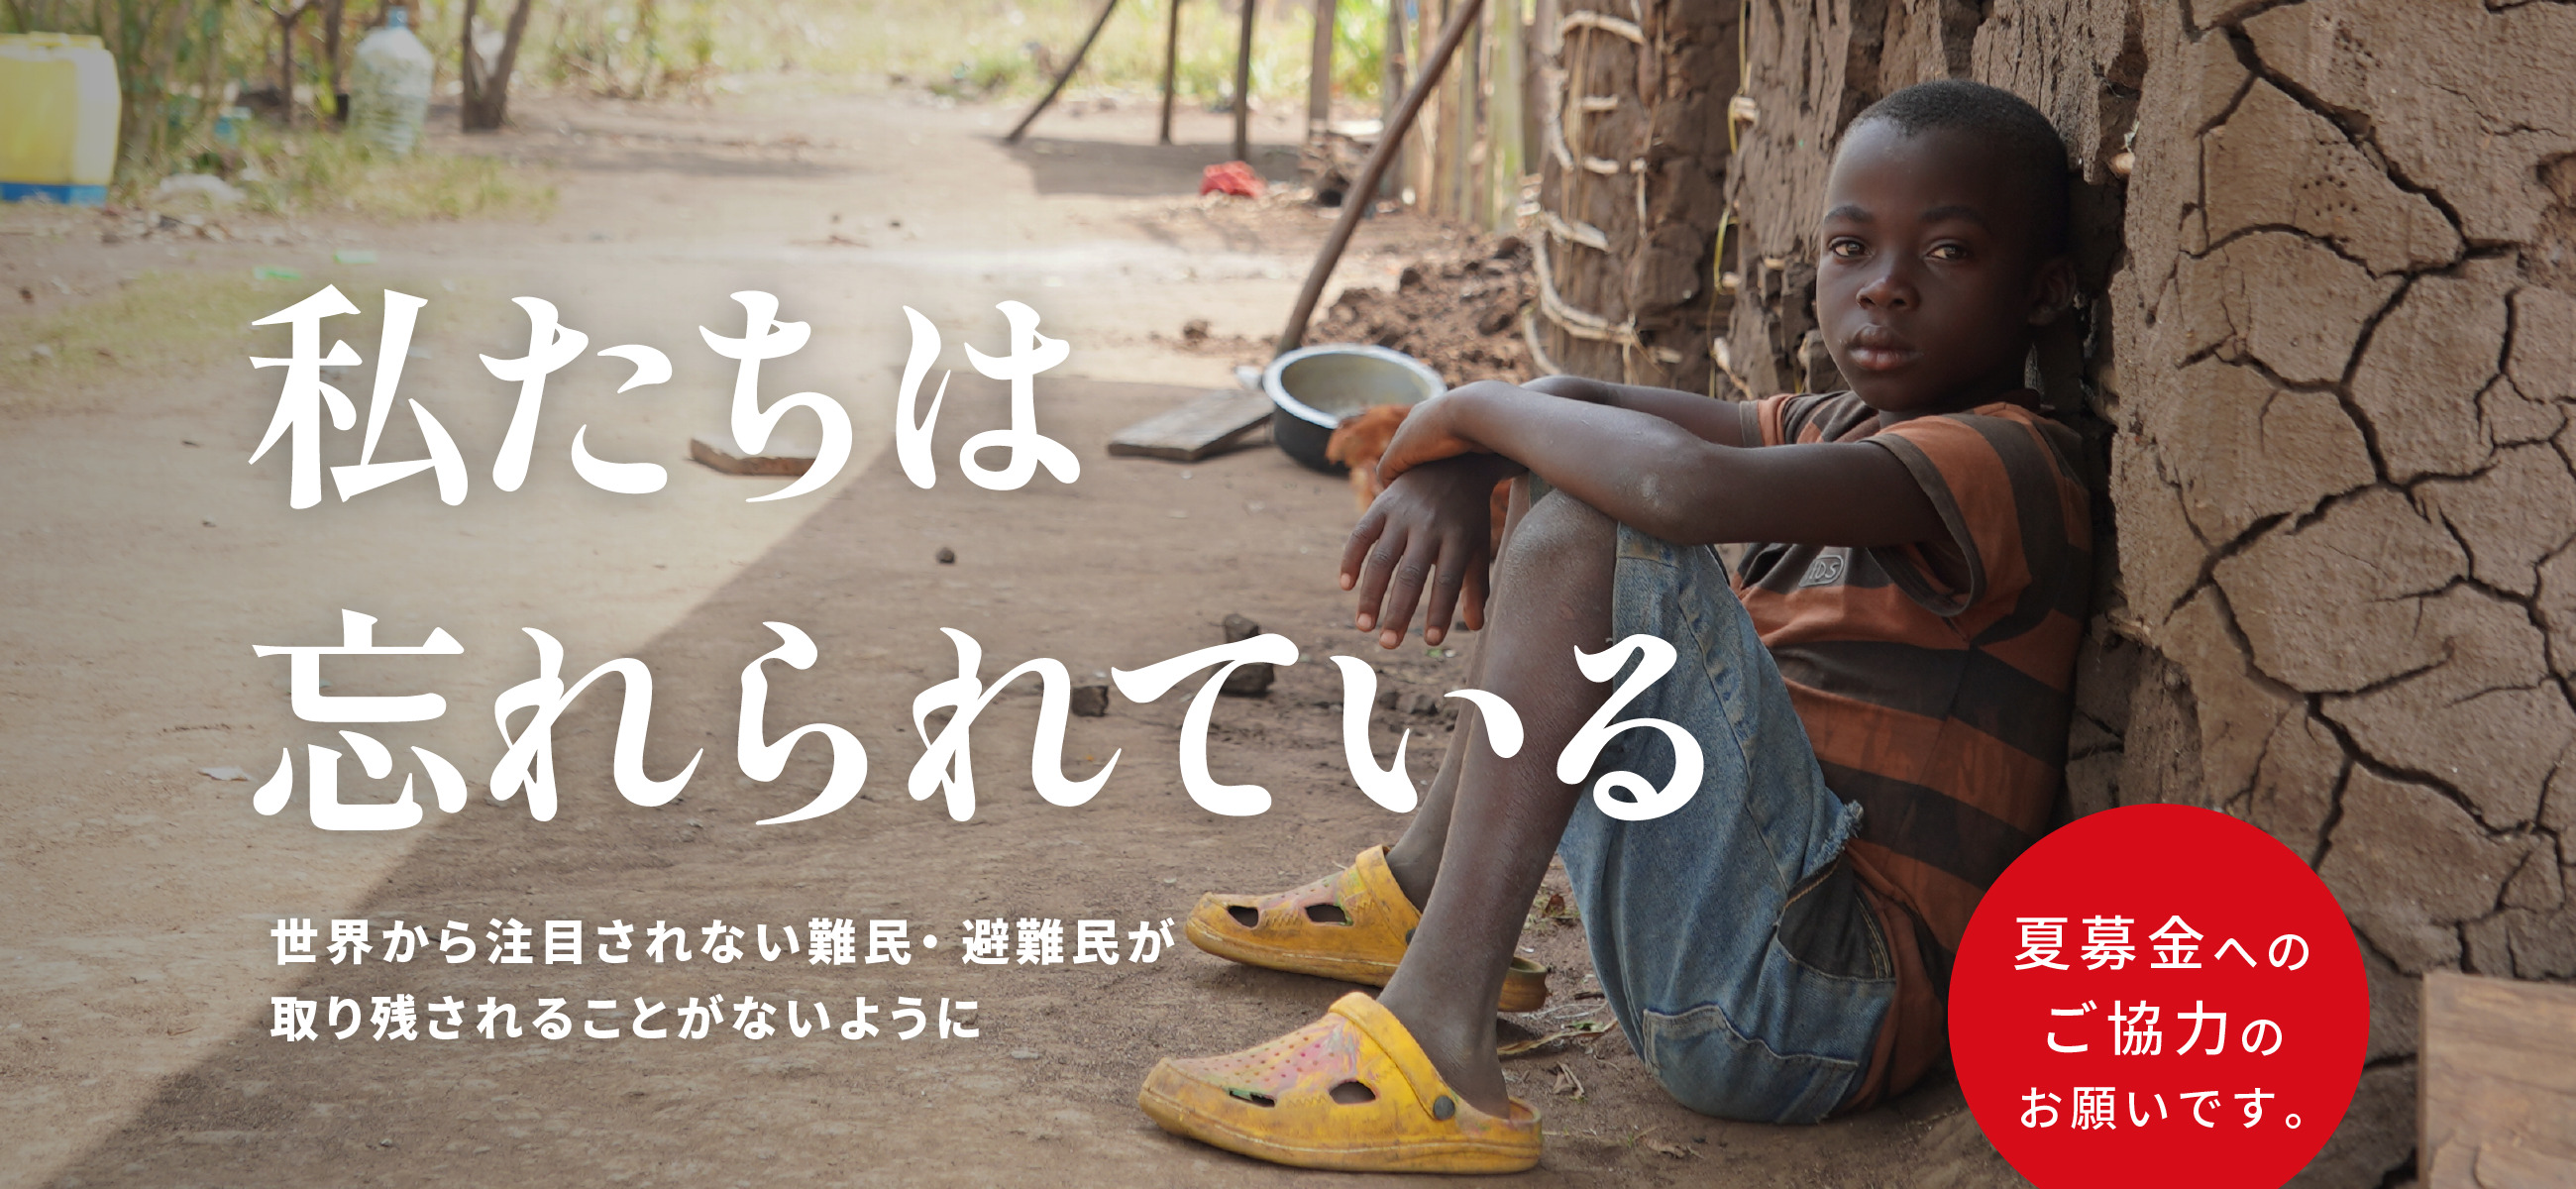 AAR Japan［難民を助ける会］：日本生まれの国際NGO